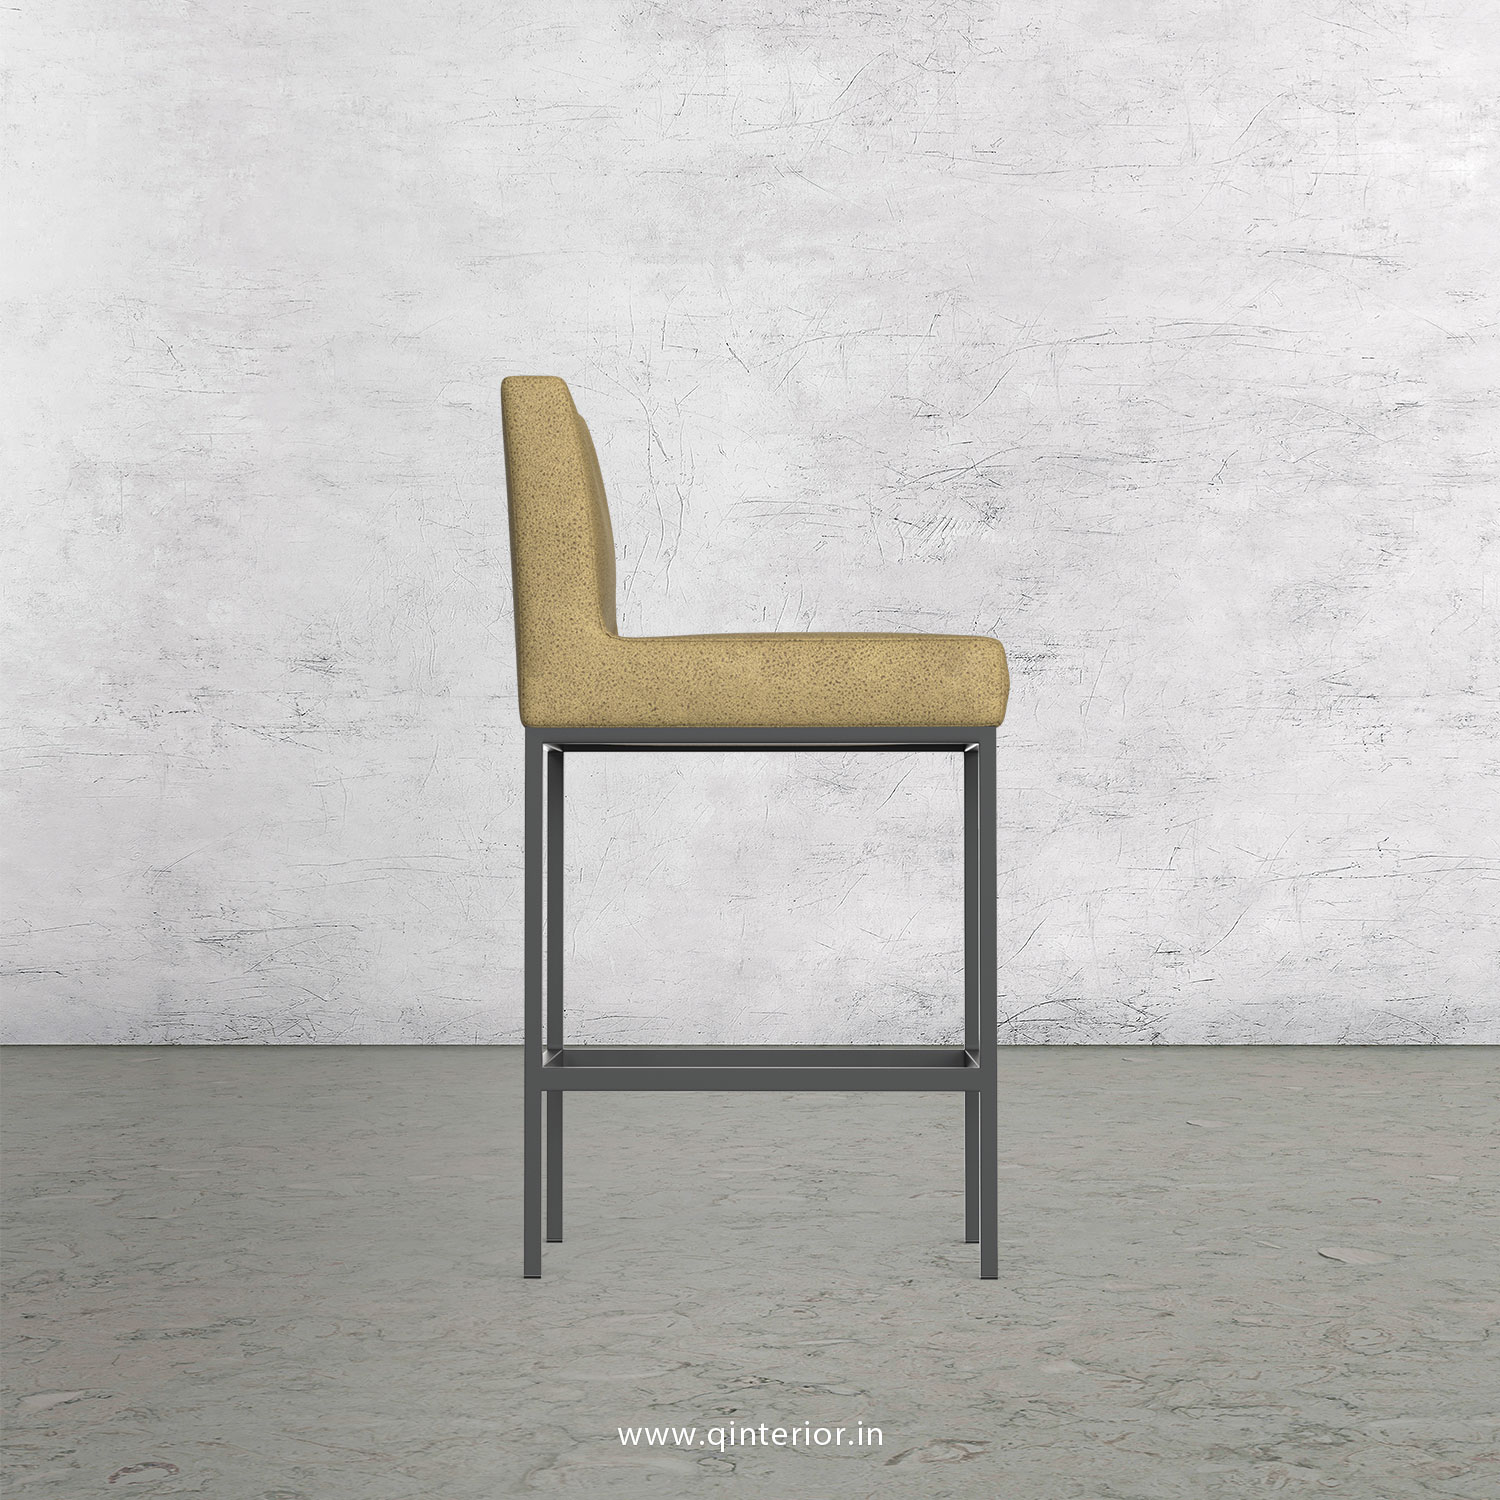 Bar Chair in Fab Leather Fabric - BCH001 FL01